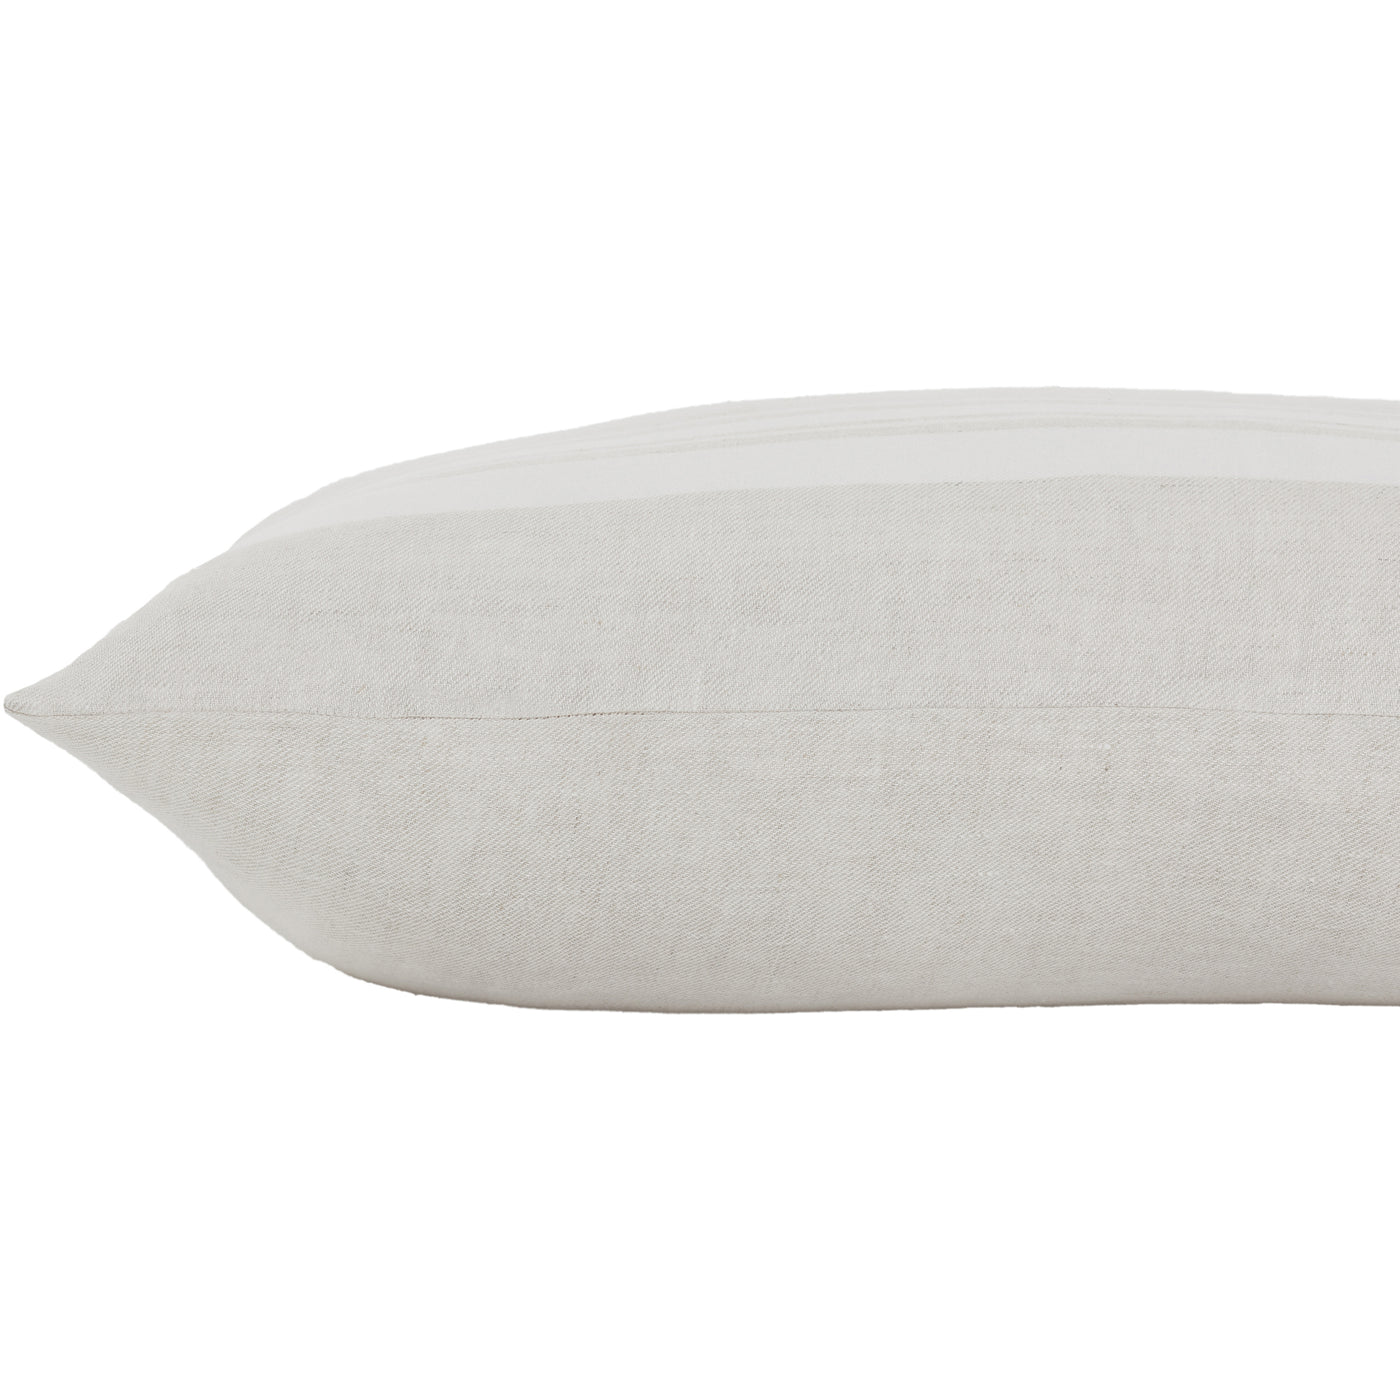 Reese Kidney Decorative Pillow